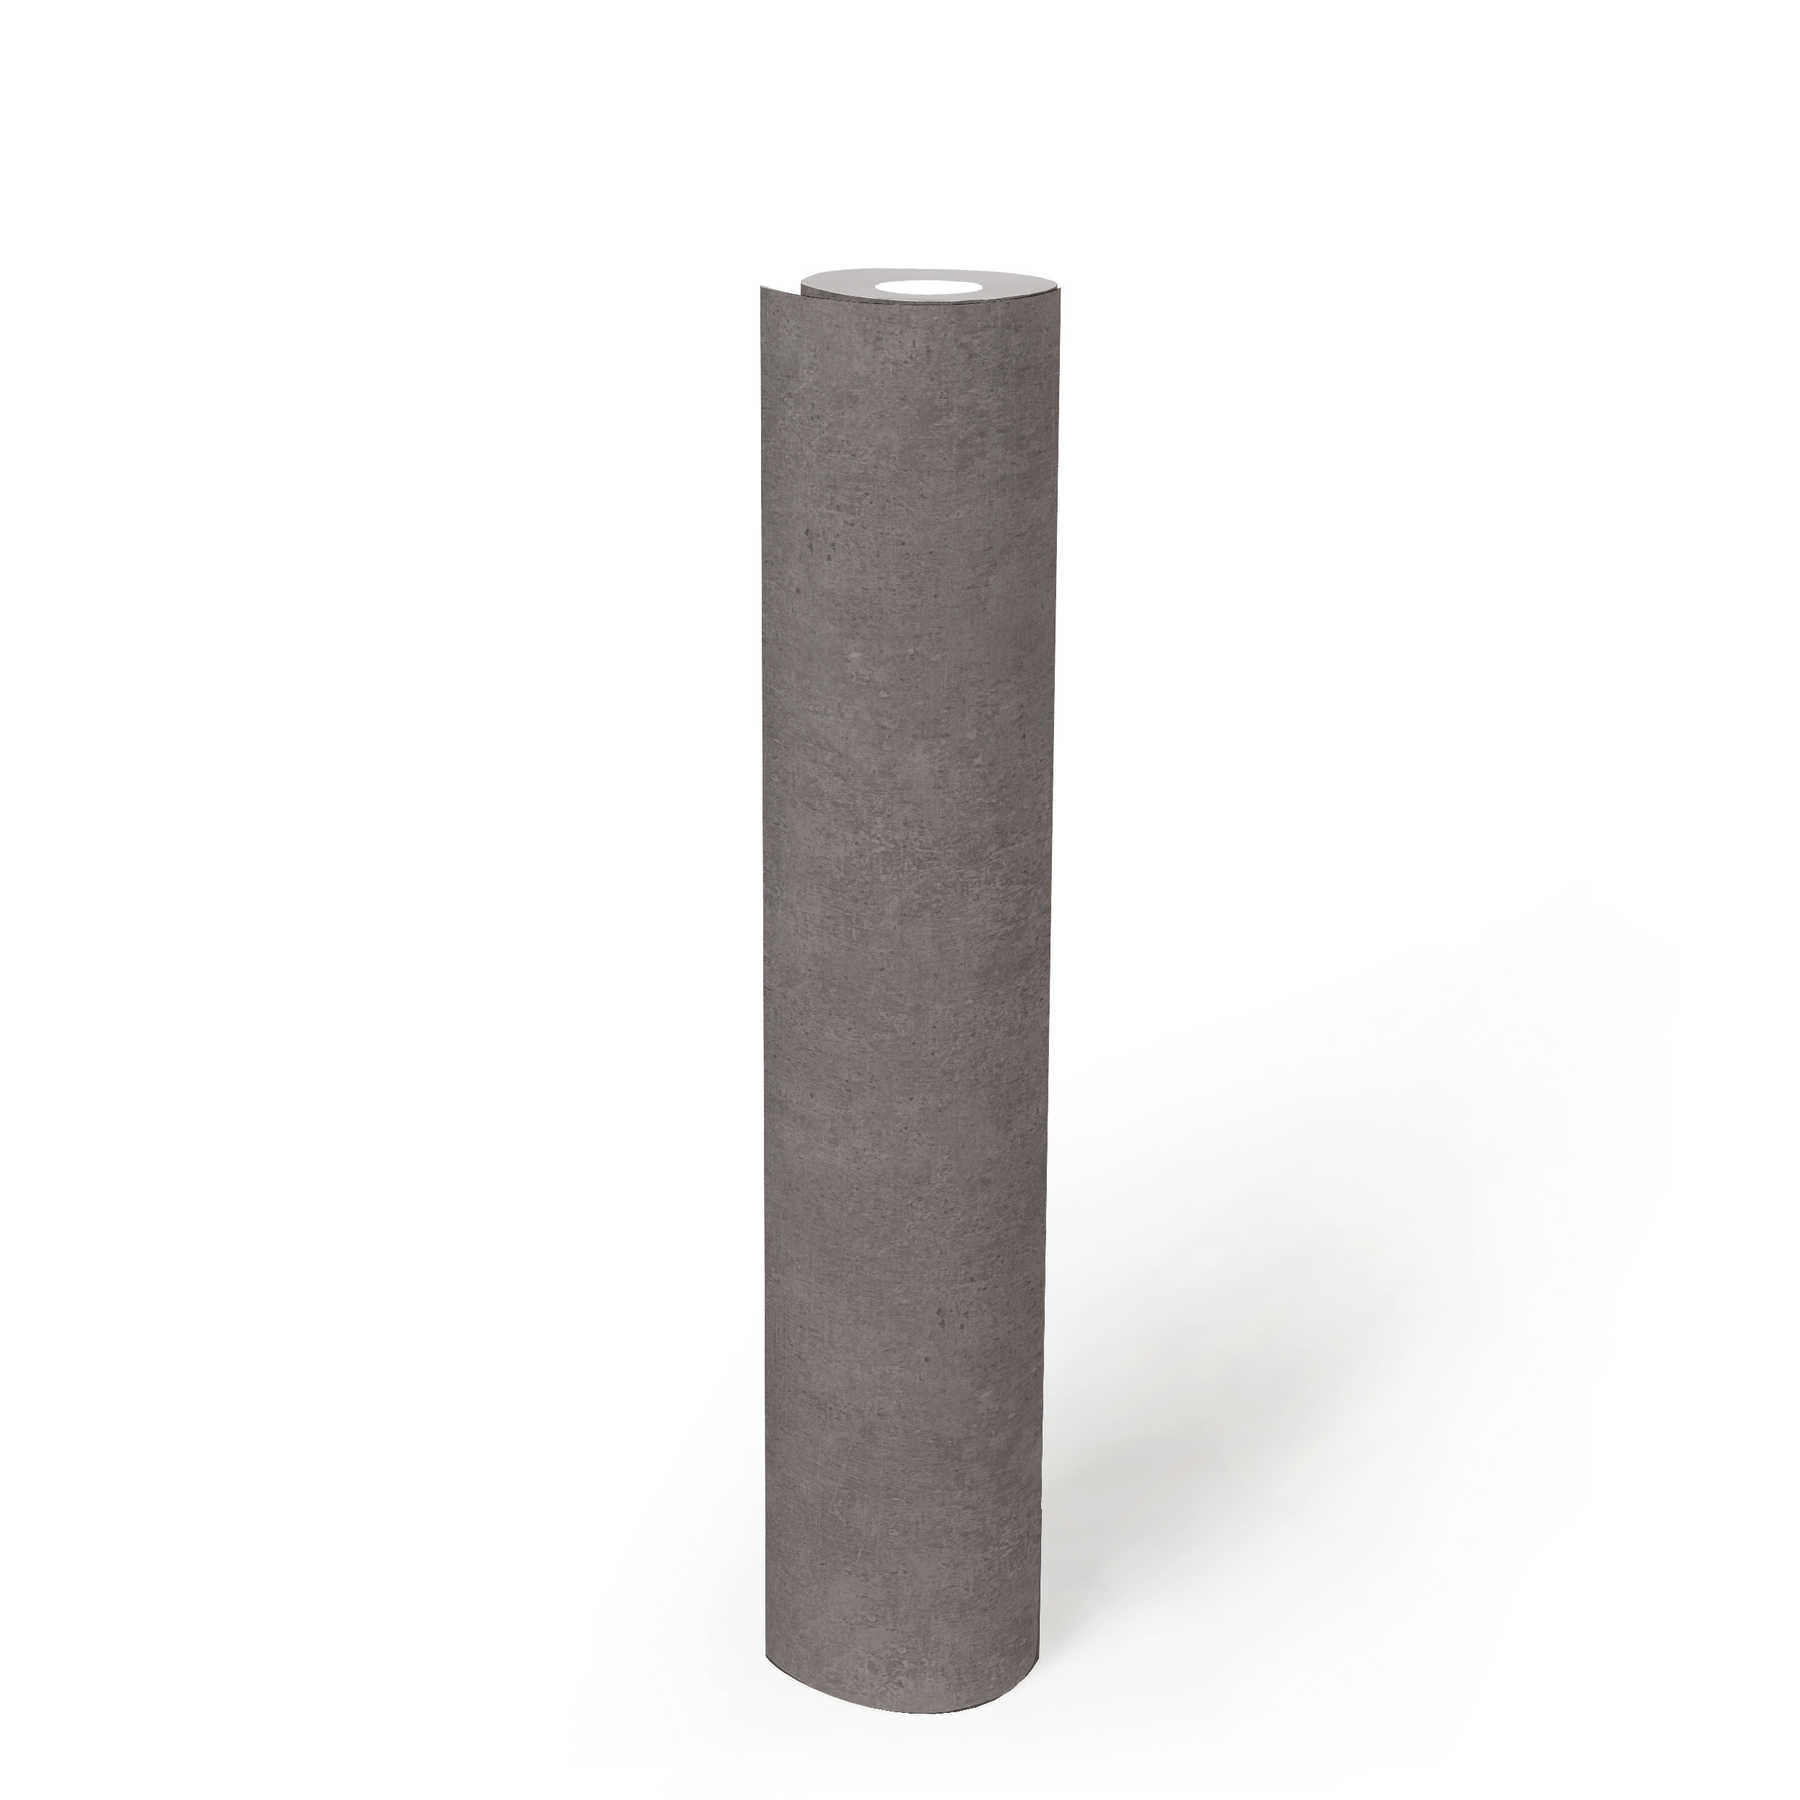             Non-woven wallpaper plain, colour pattern & vintage look - grey
        